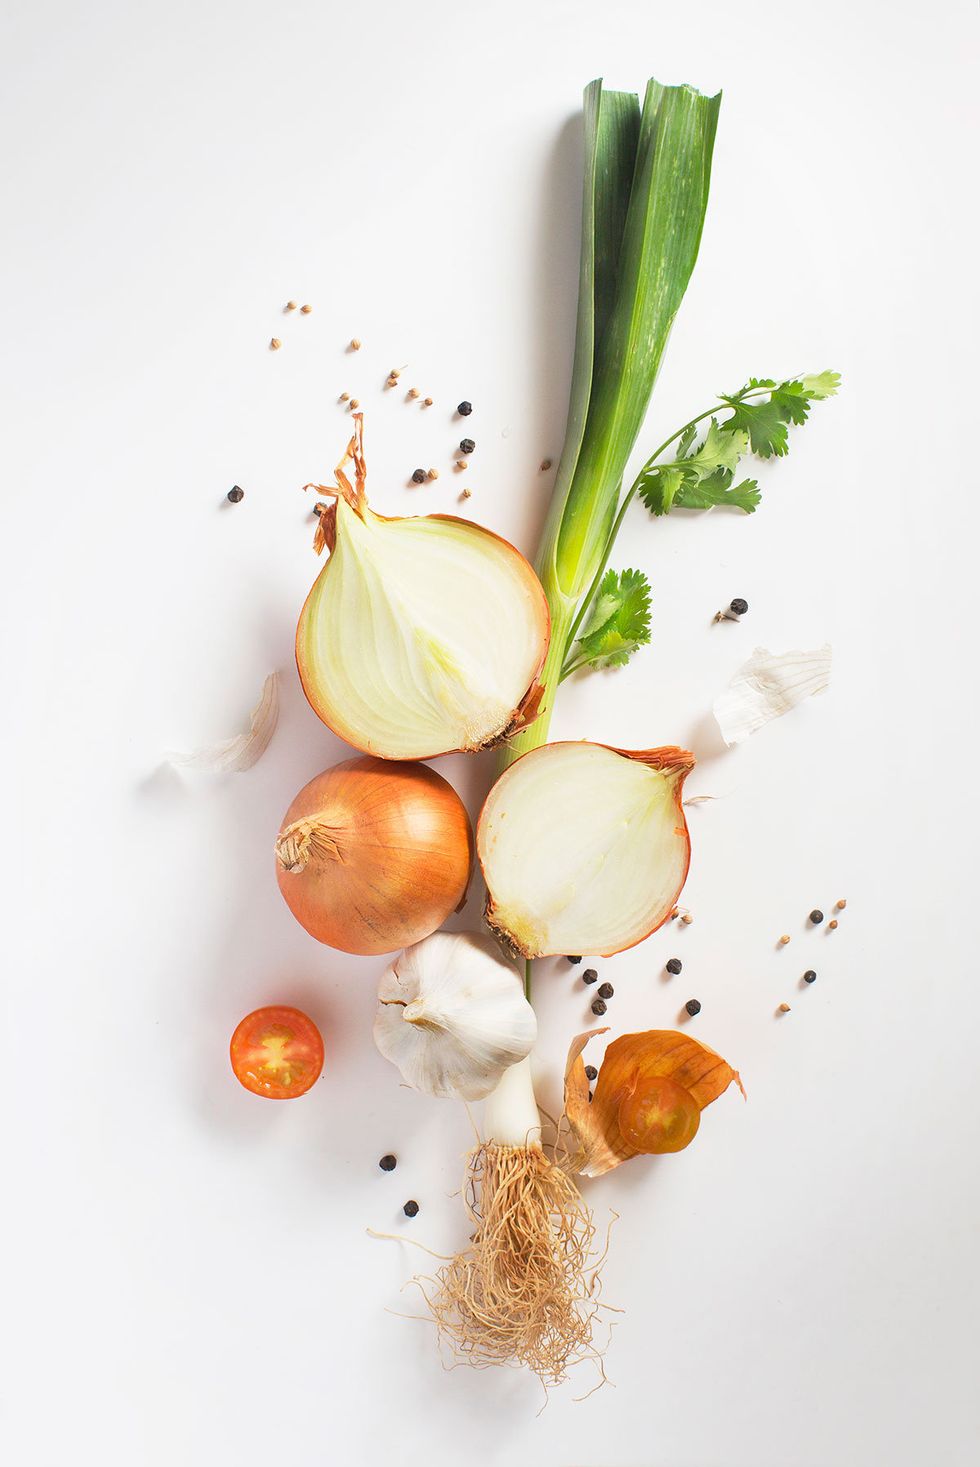 Food, Vegetable, Plant, Shallot, Still life photography, Pearl onion, Garnish, Onion, Allium, Welsh onion, 